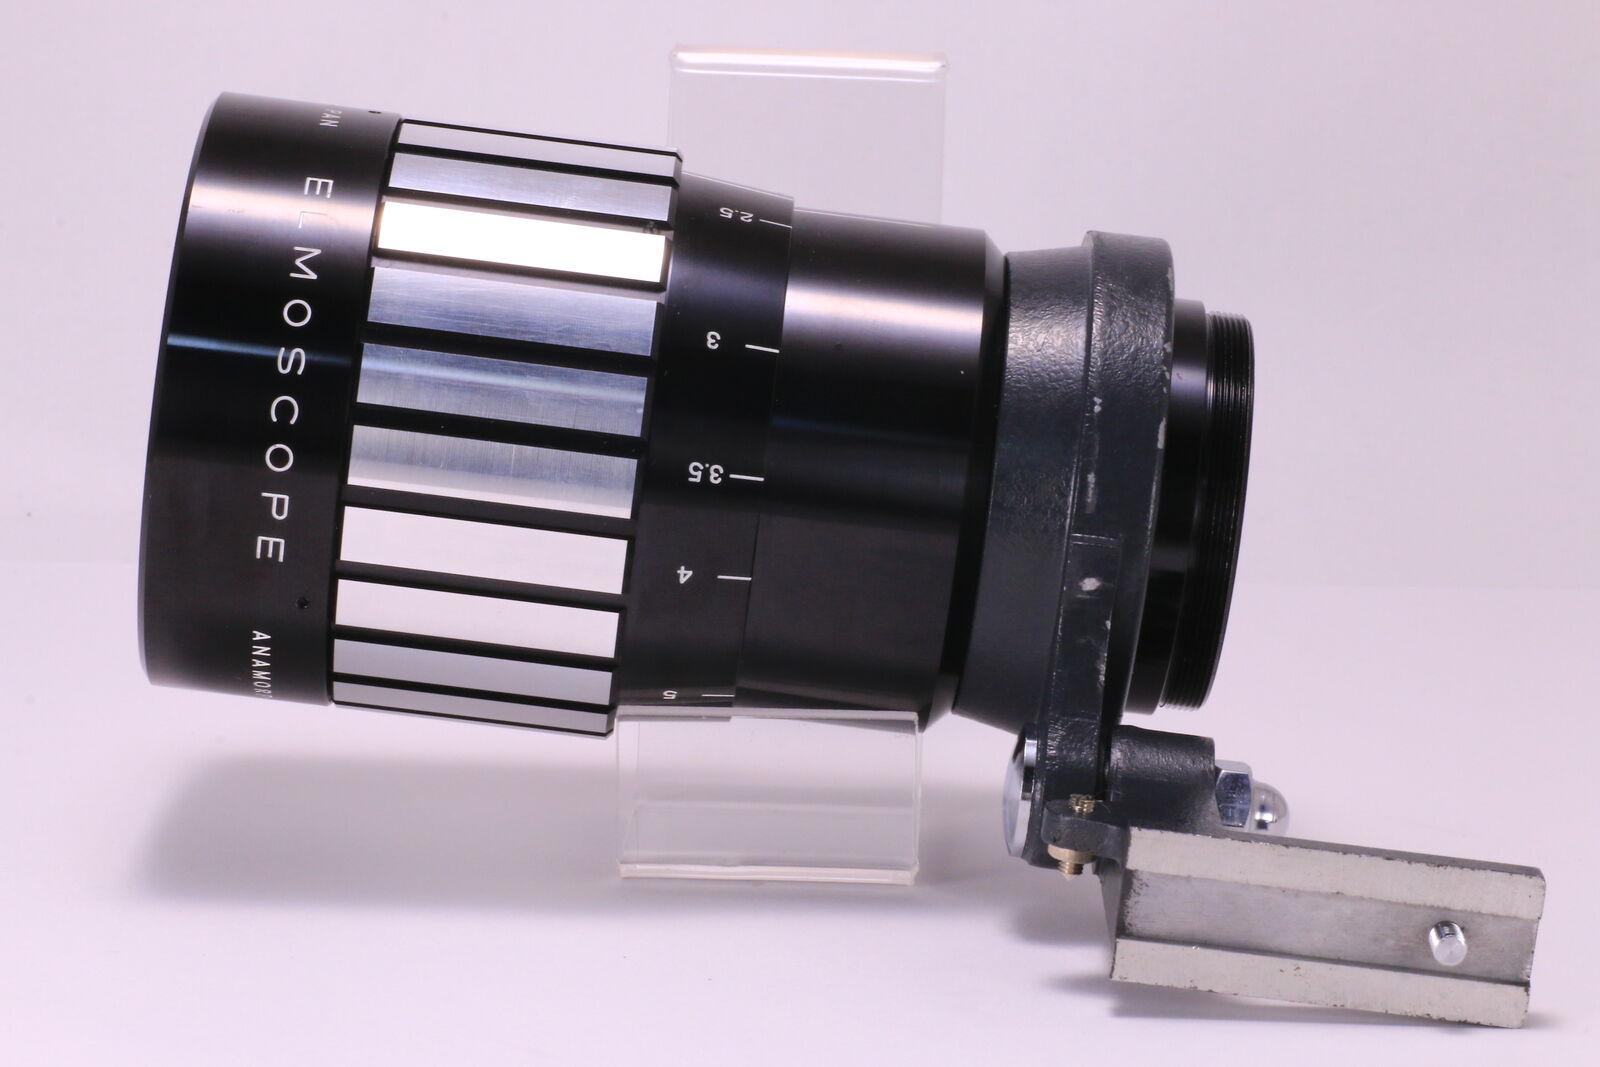 elmoscope type 1 - Cameras - EOSHD Forum